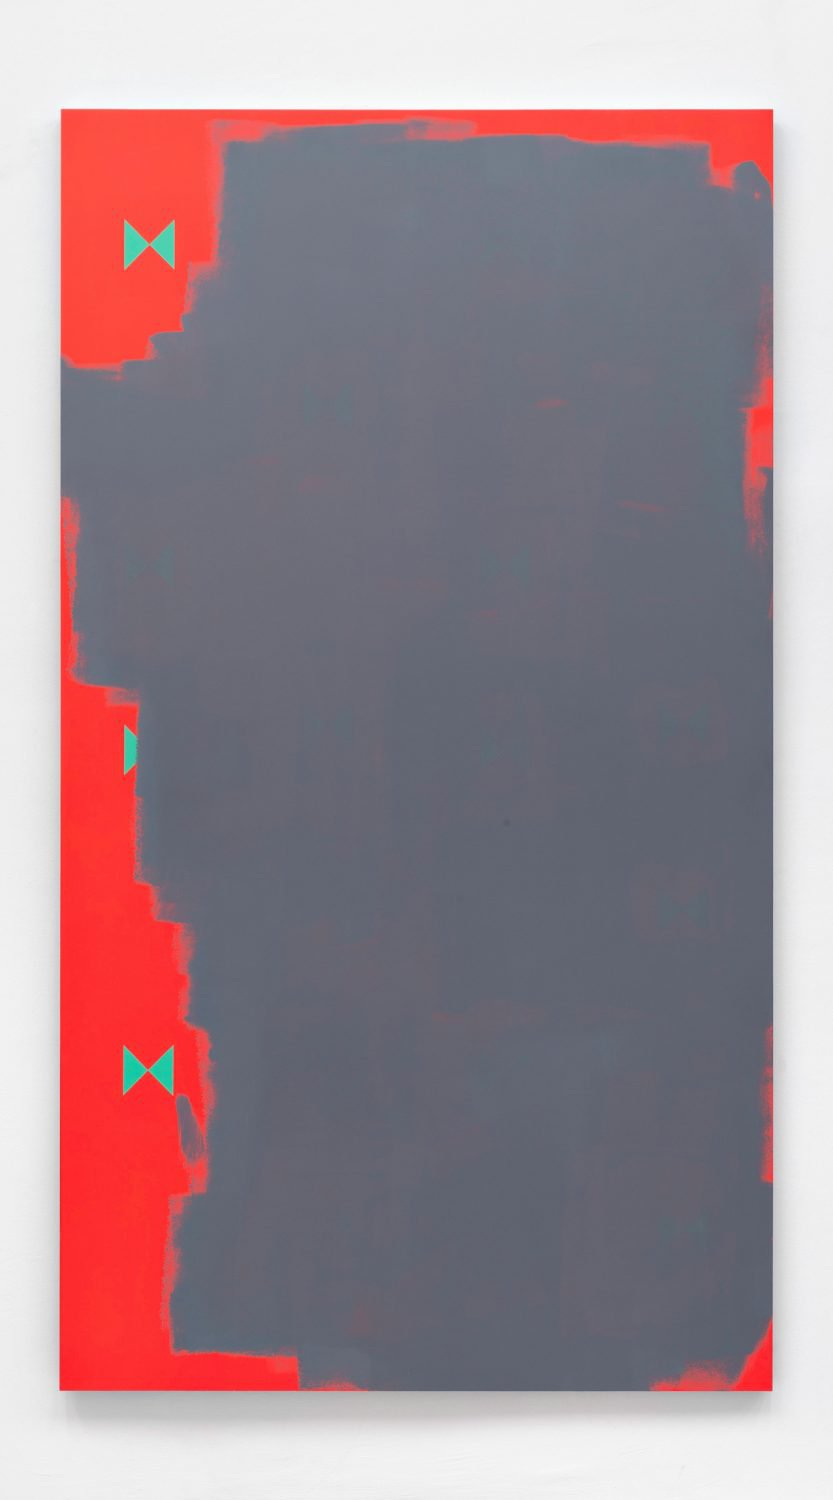 Nick OberthalerUntitled, 2015Acrylic on aluminium180 x 100 cm